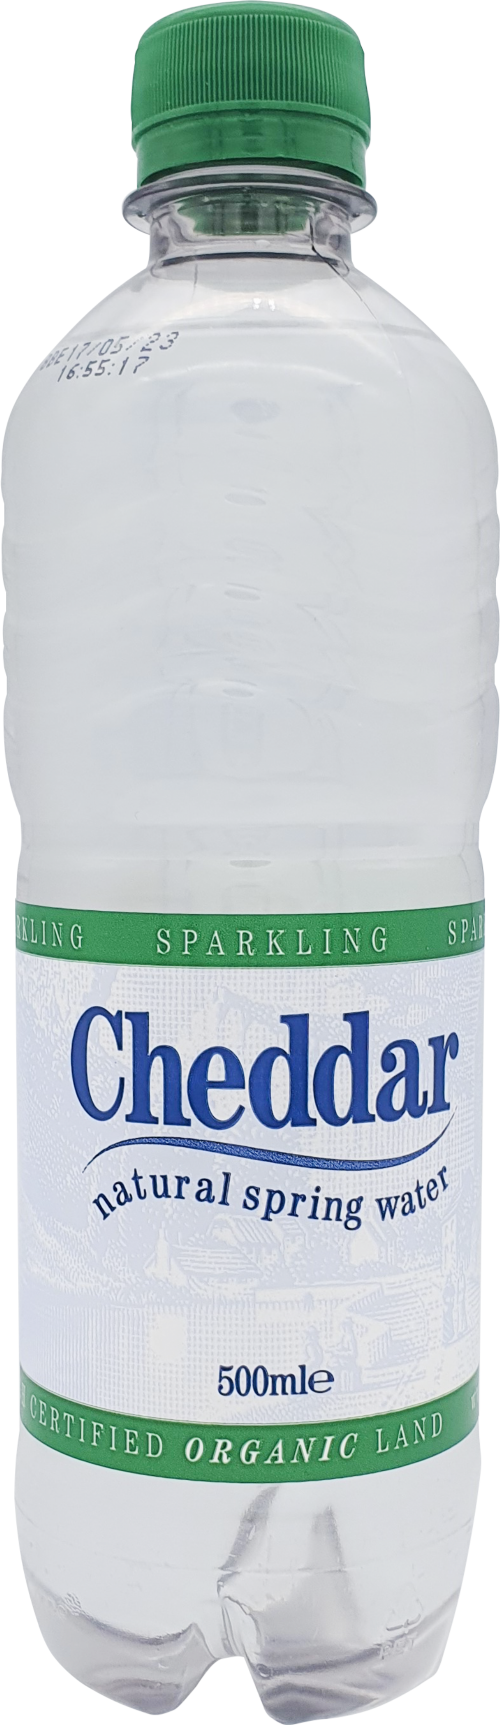 CHEDDAR Natural Spring Water - Sparkling PET 500ml